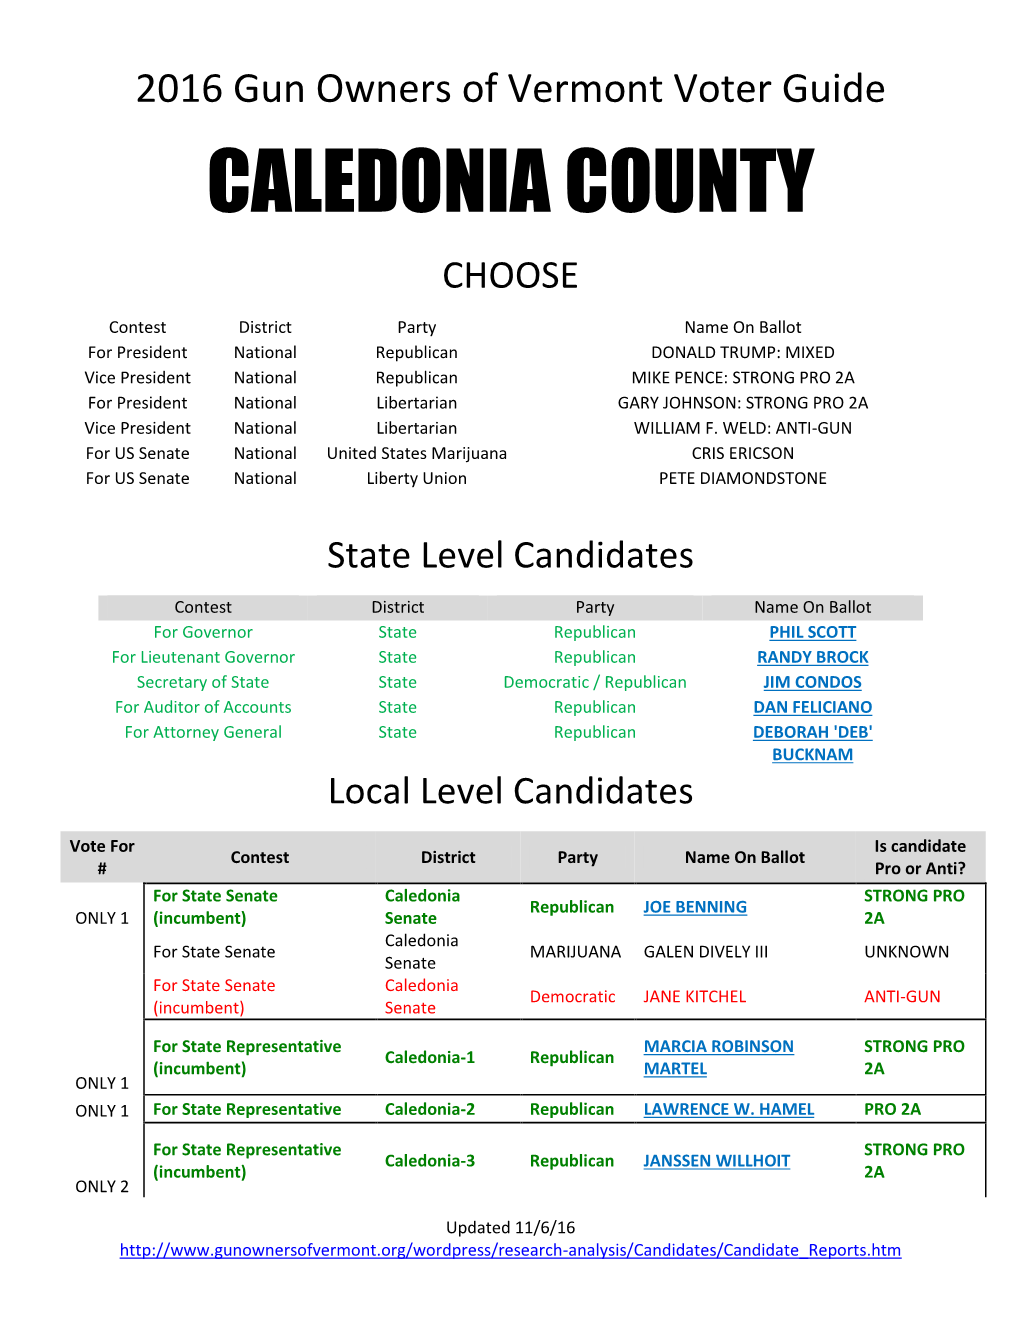 Caledonia County Choose